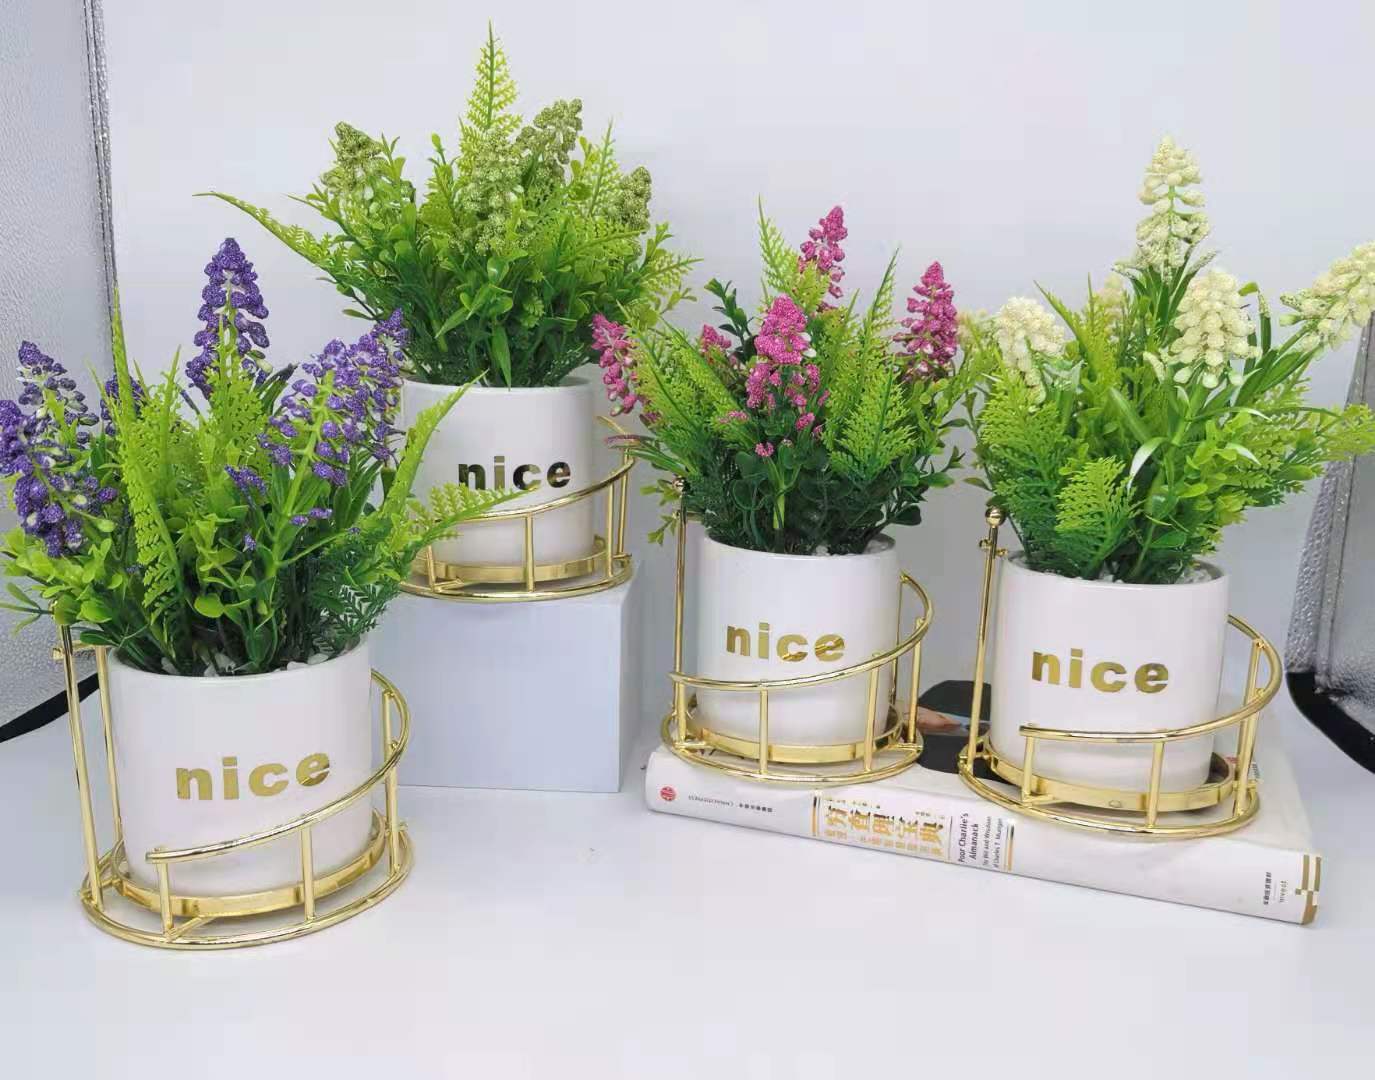 Artificial Potted Plants Home Office Garden | HOG-HomeOfficeGarden | online marketplace